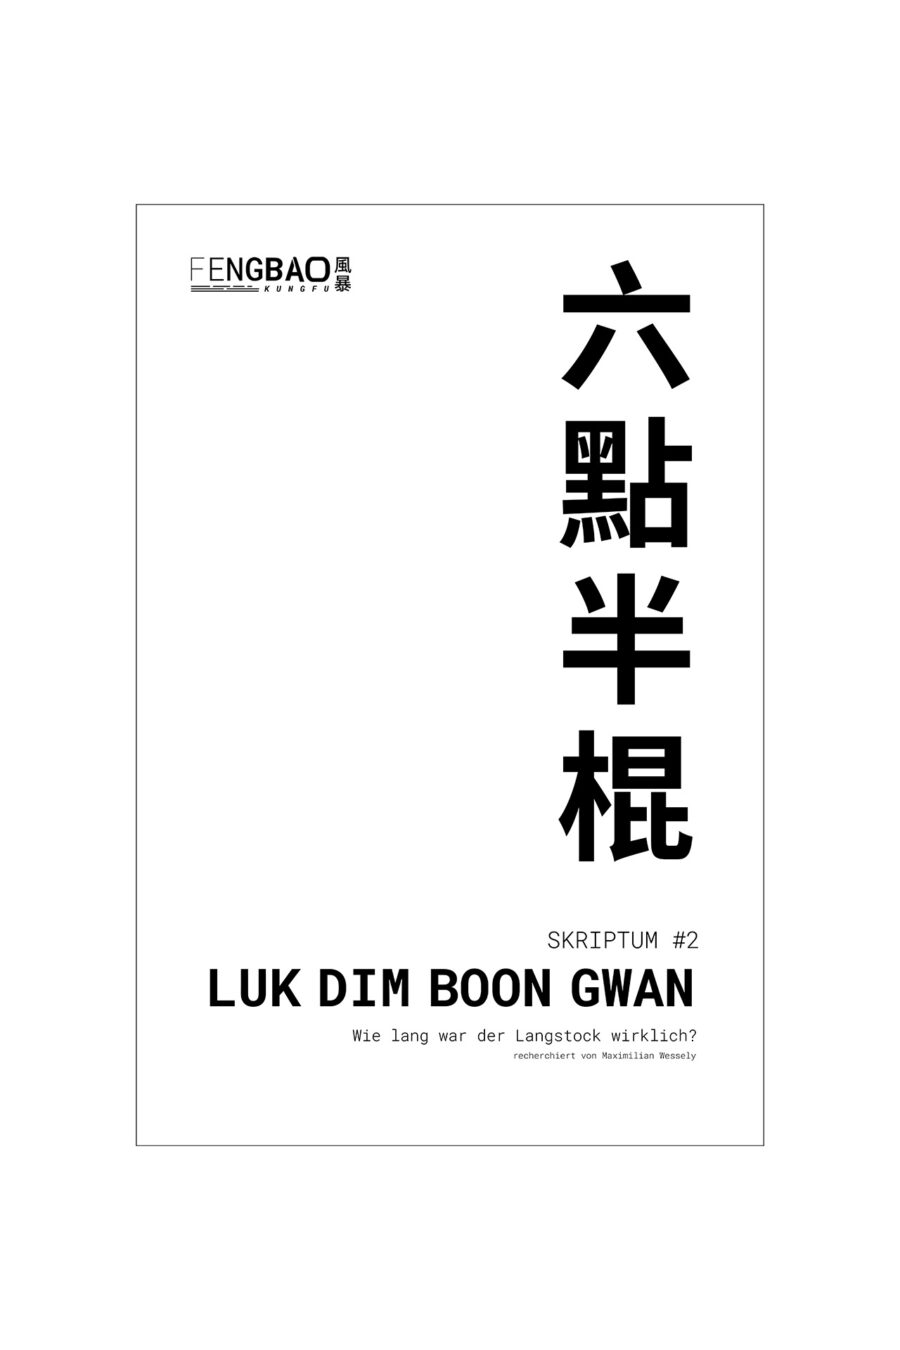 fengbao kung fu research skriptum langstock luk dim boon gwan